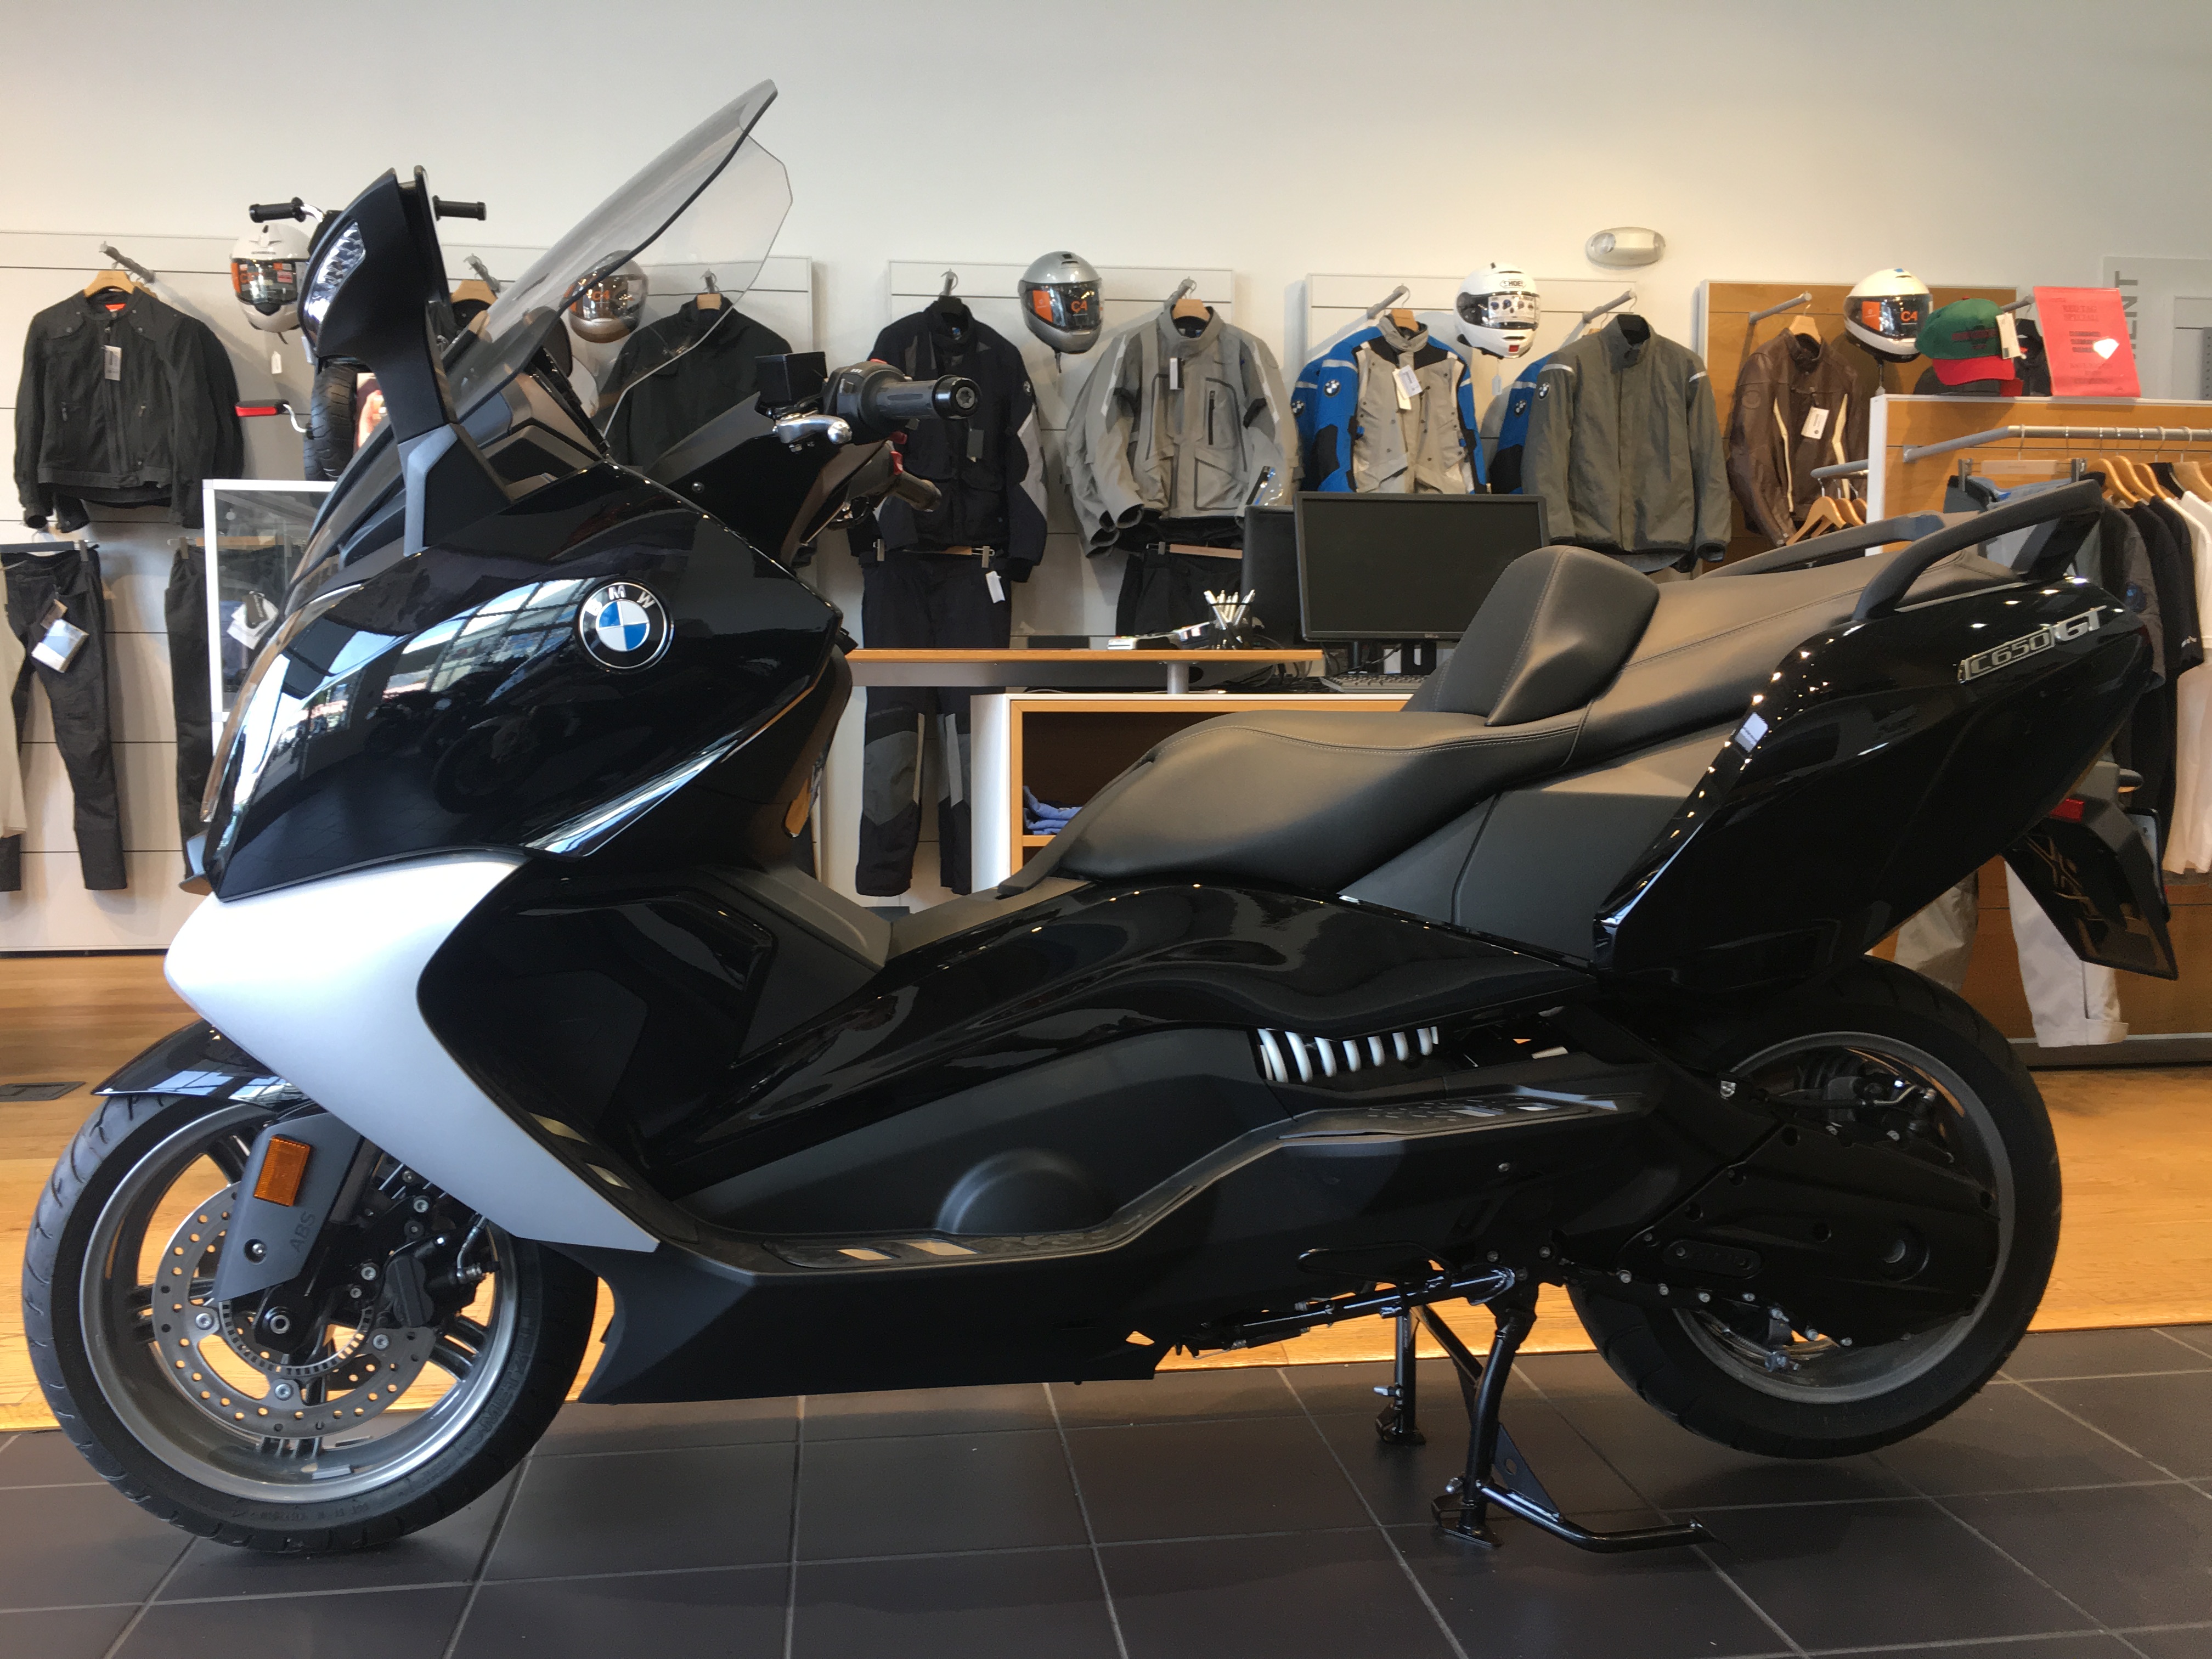 New Motorcycle Inventory - C650GT - Sandia BMW Motorcycles - Albuquerque, NM.